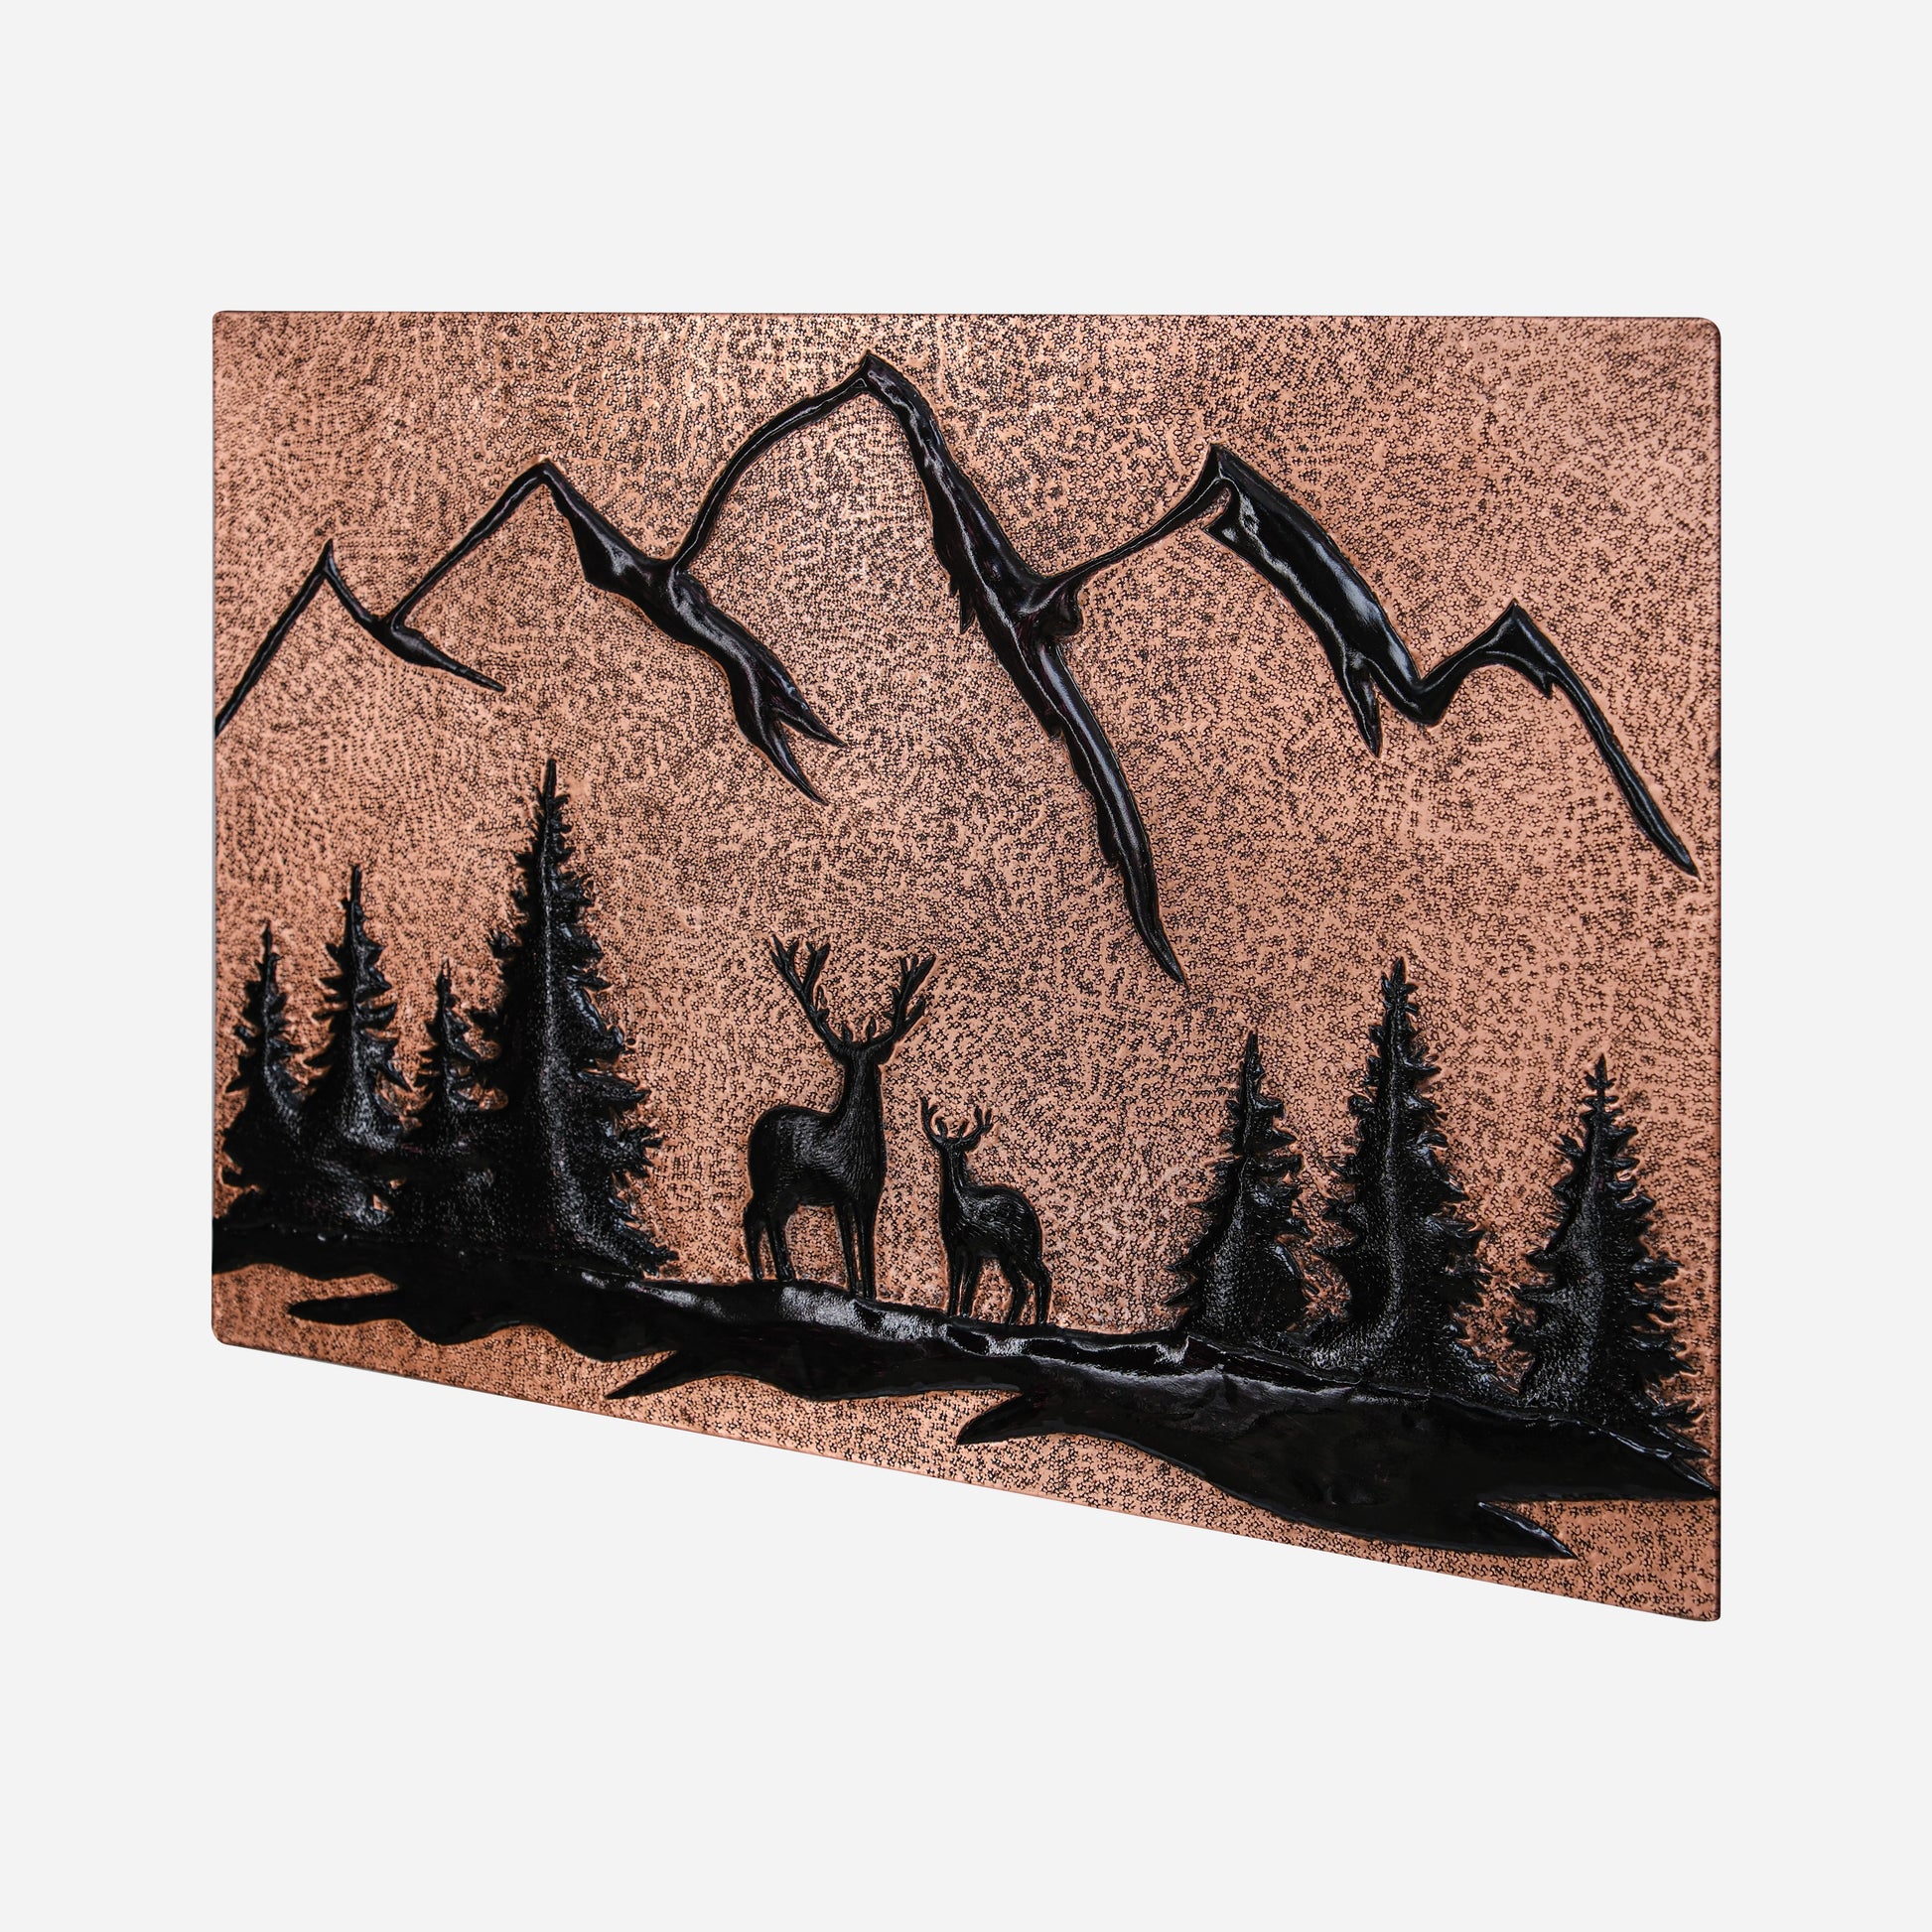 Copper Backsplash Panel (Mountain Behind the Deer in the Forest, Copper&Black Color)